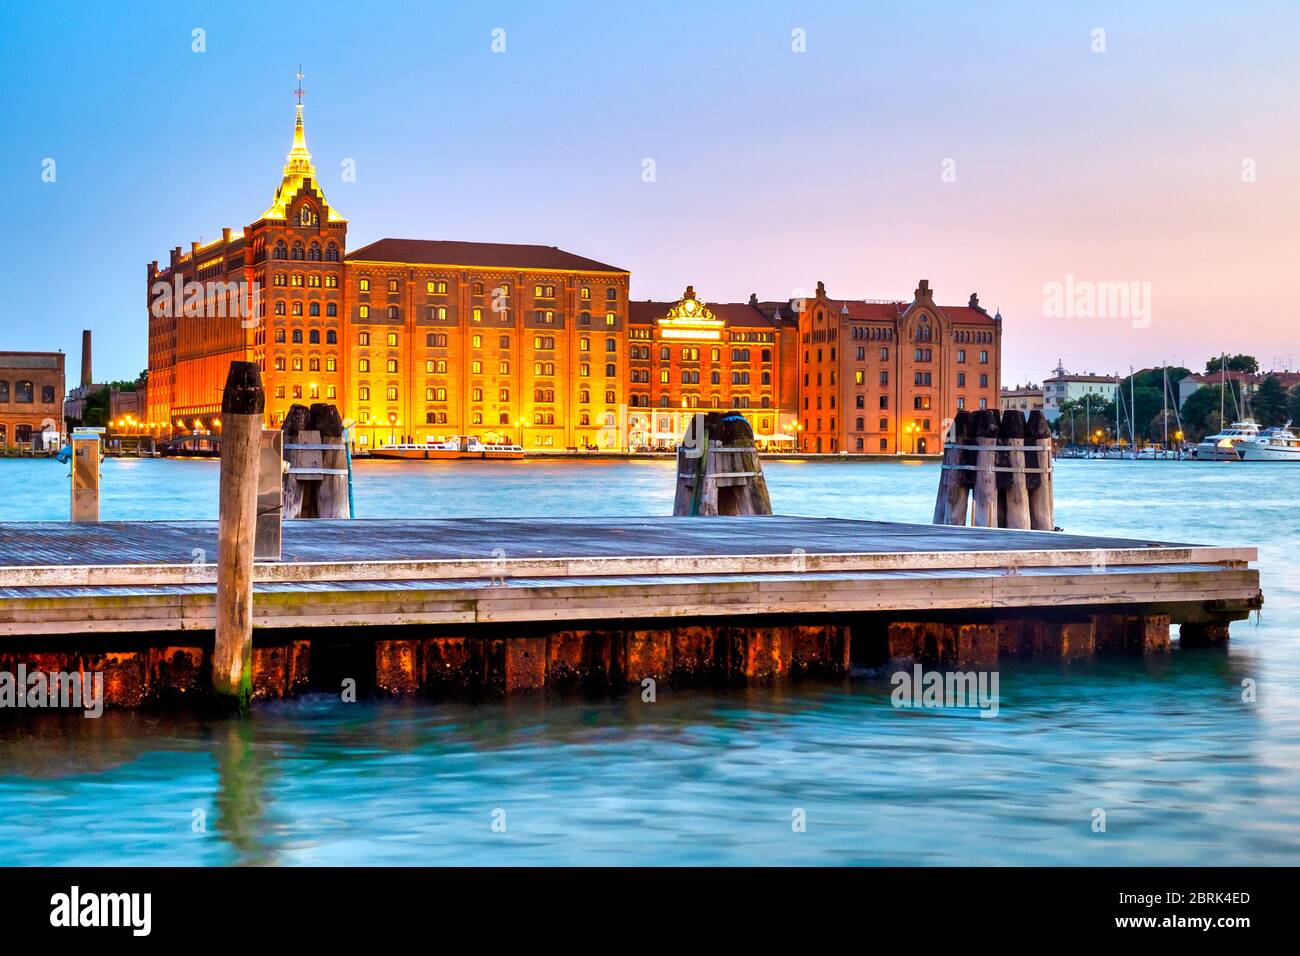 View of the Molino Stucky from the Giudecca canal, Venice, Italy Stock Photo